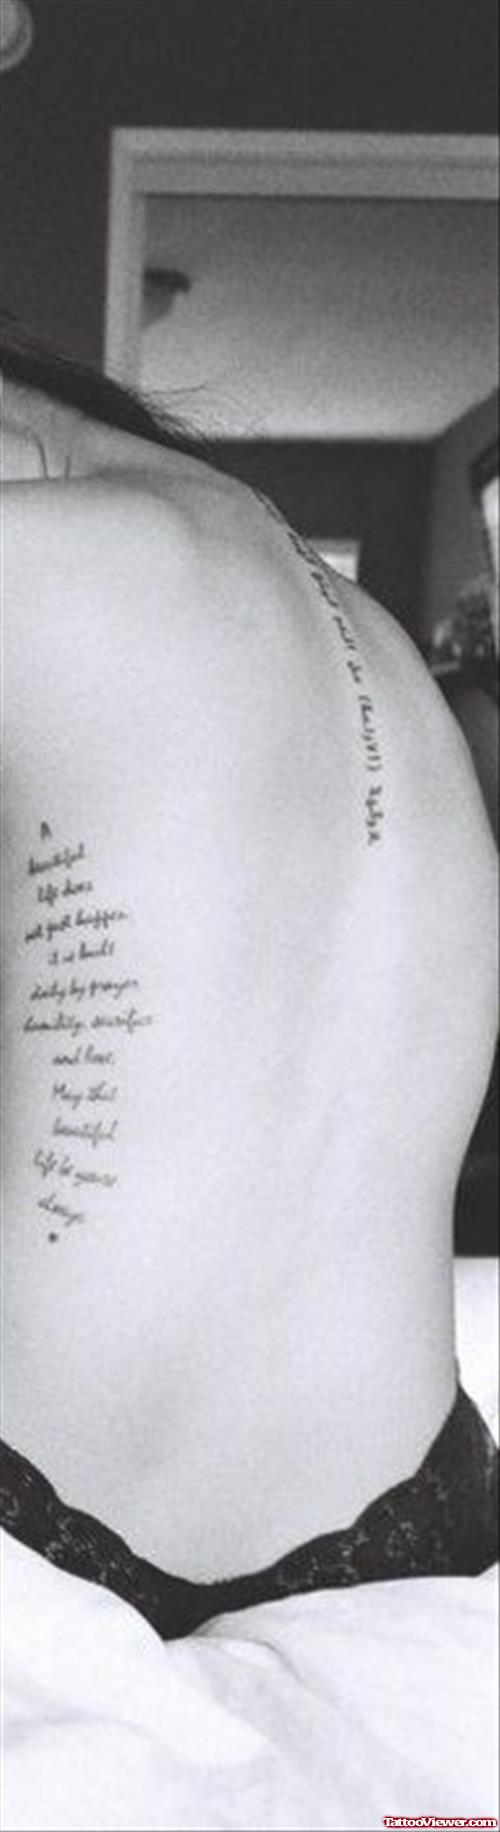 Feminine Lettering Tattoo On Back